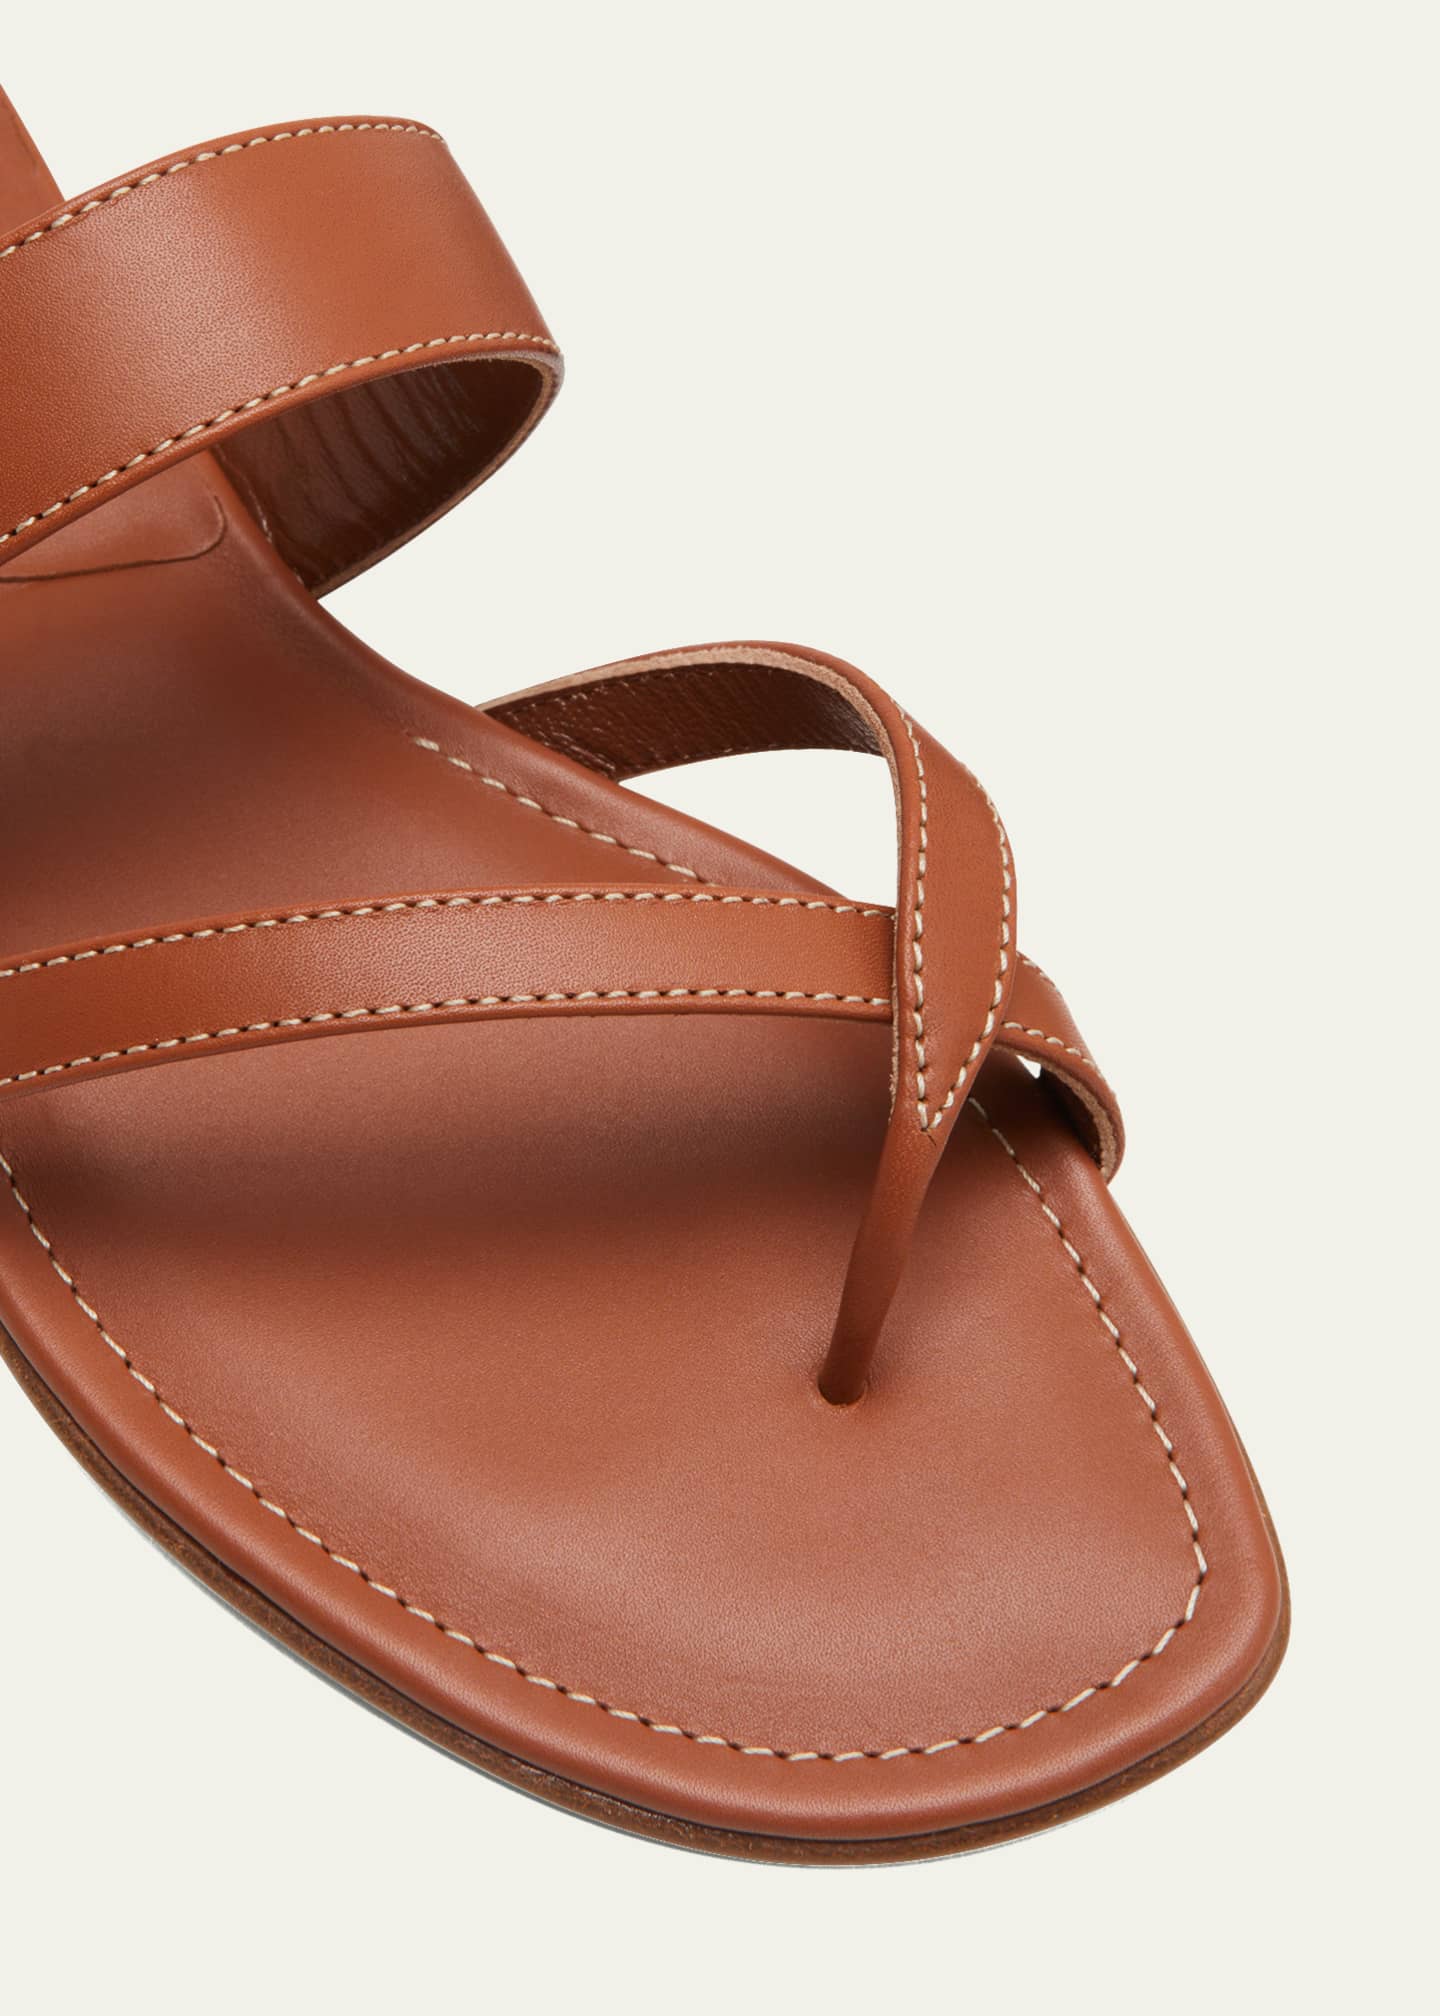 Manolo Blahnik Susa Flat Leather Sandals